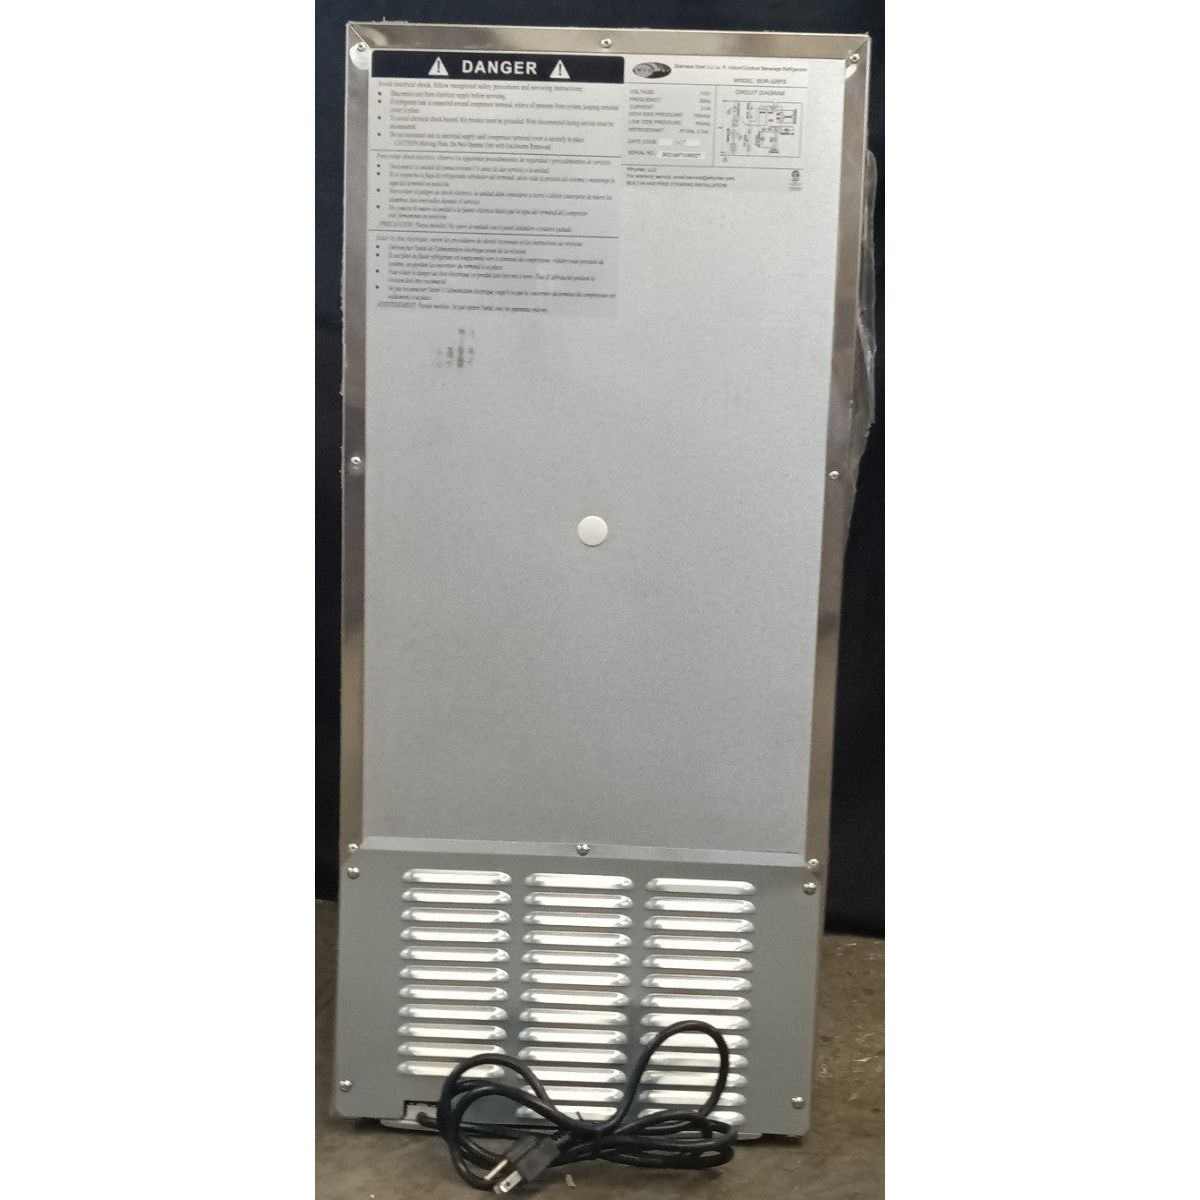 Whynter Stainless Steel 3.2 CF Indoor/Outdoor Bar Beverage Refrigerator BOR-326FS